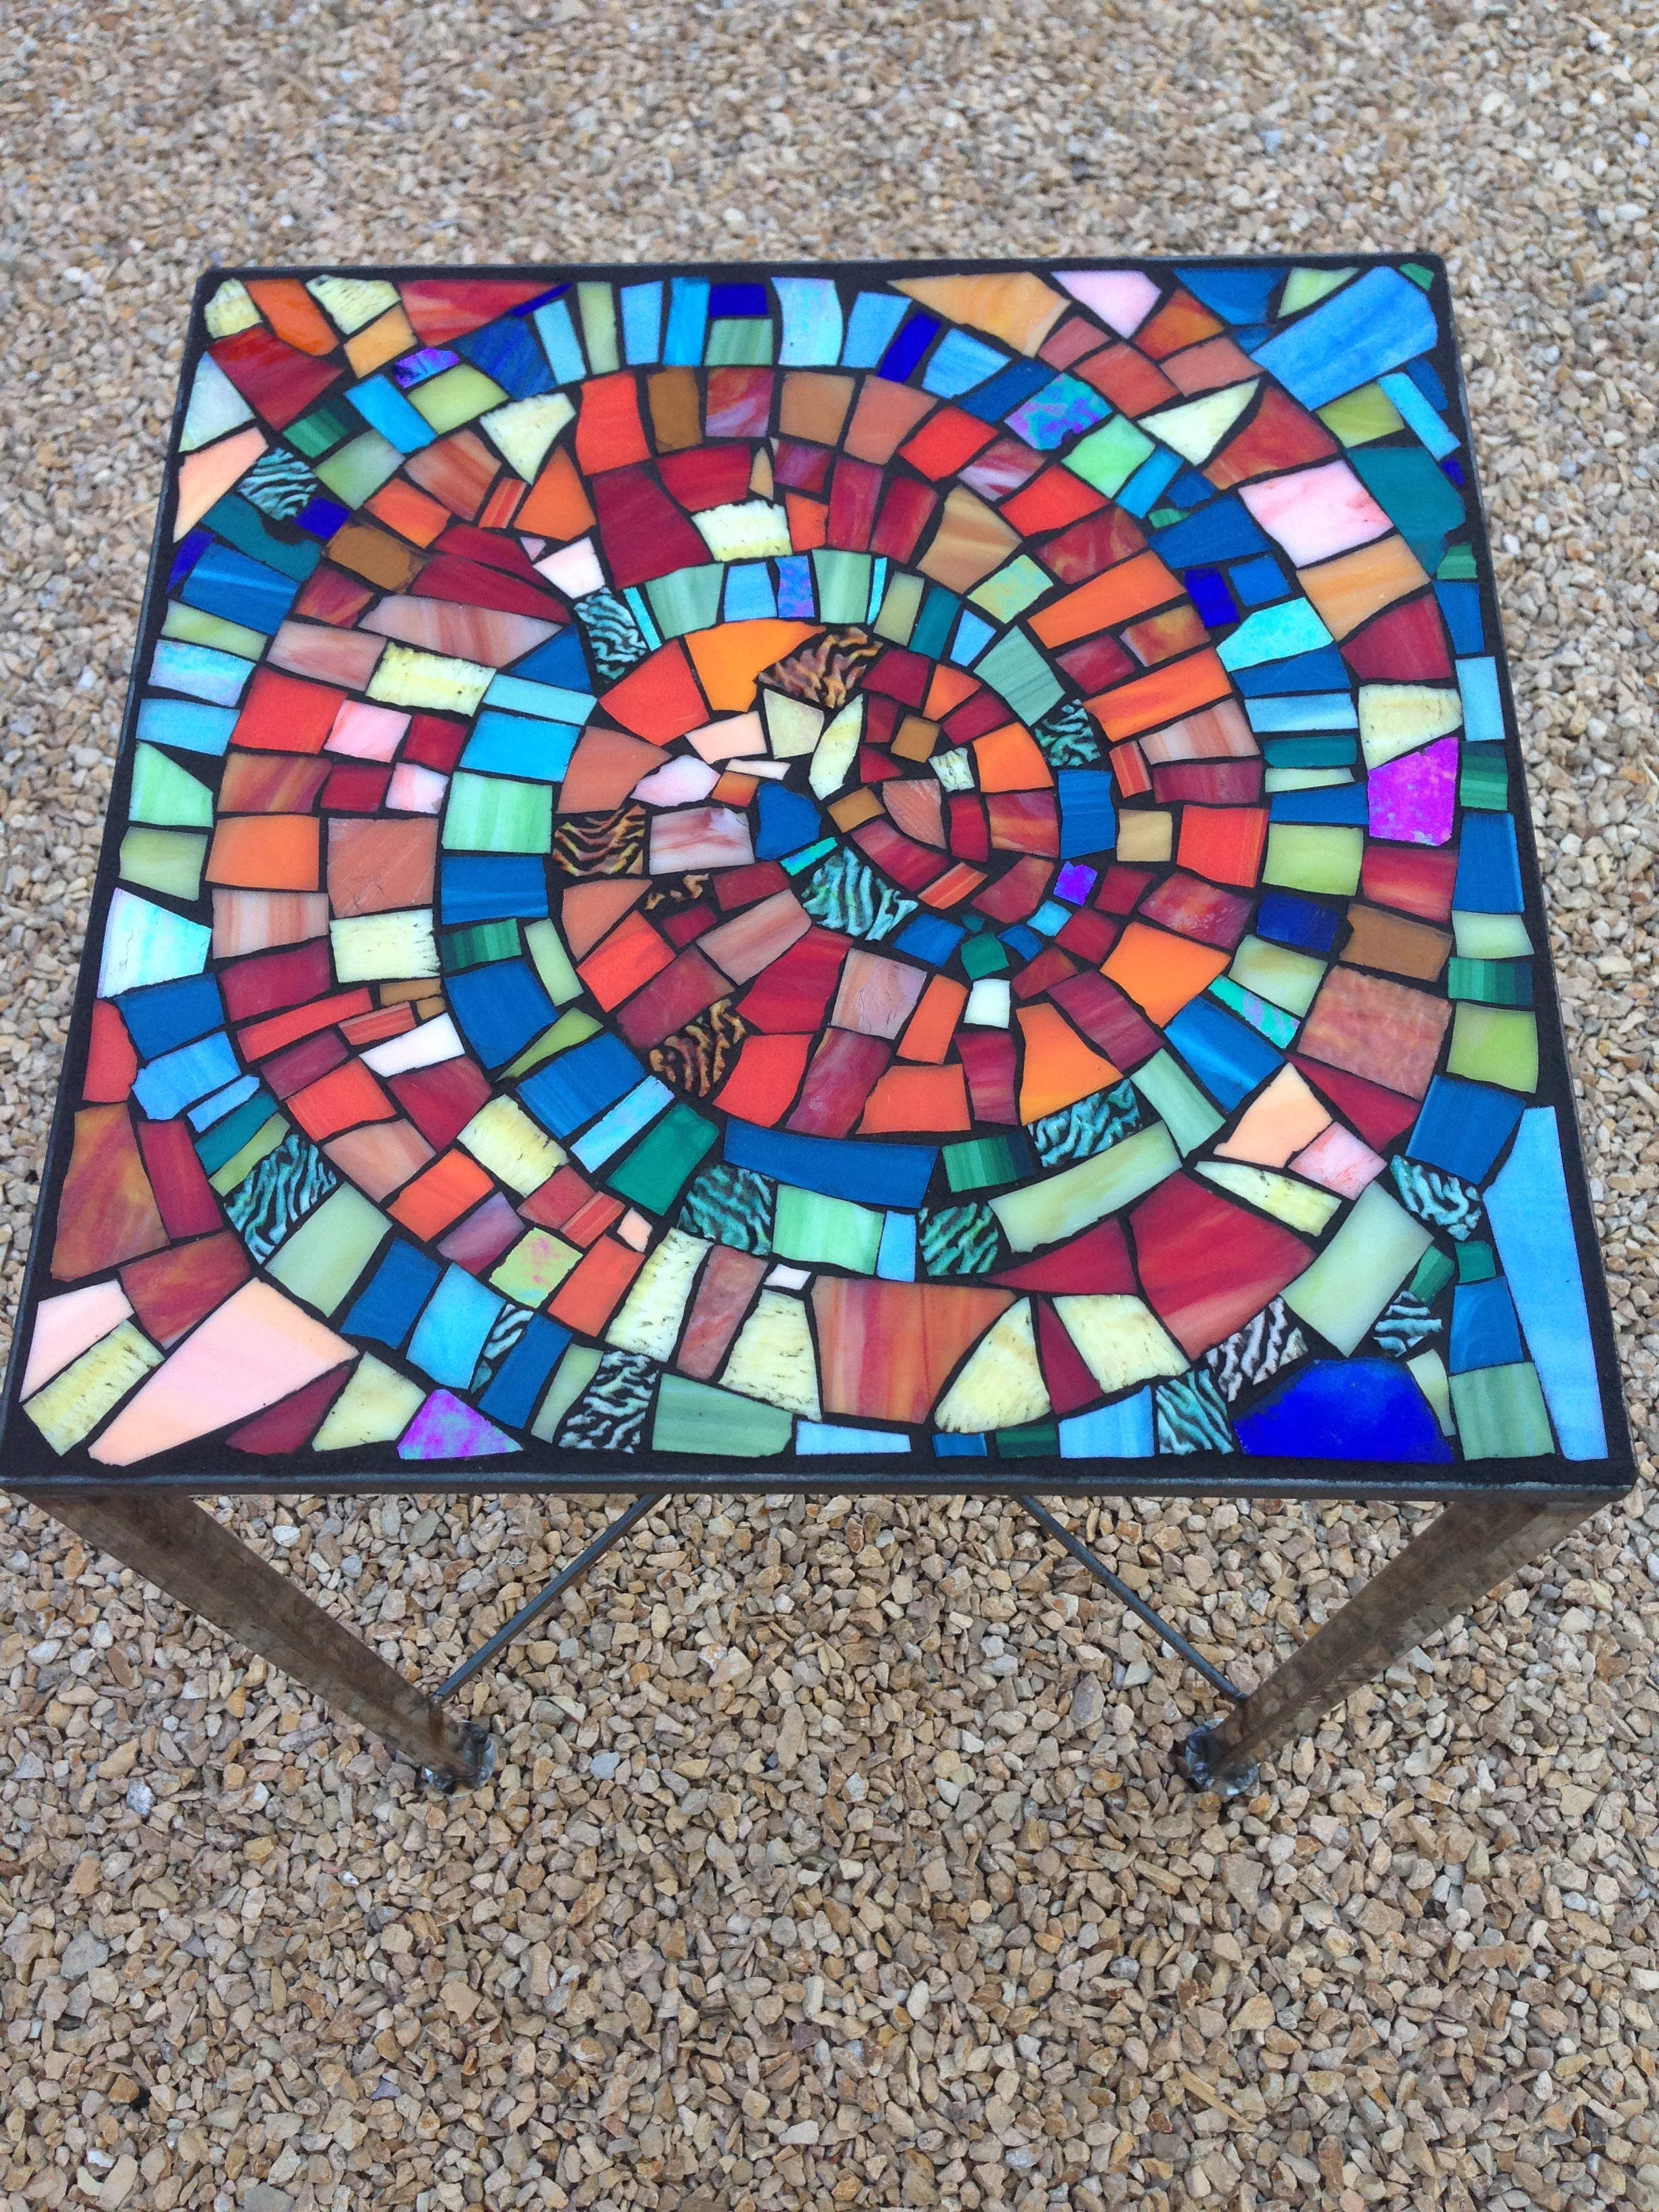 SCHEDULE of CLASSES | Santa Barbara School of Mosaic Art